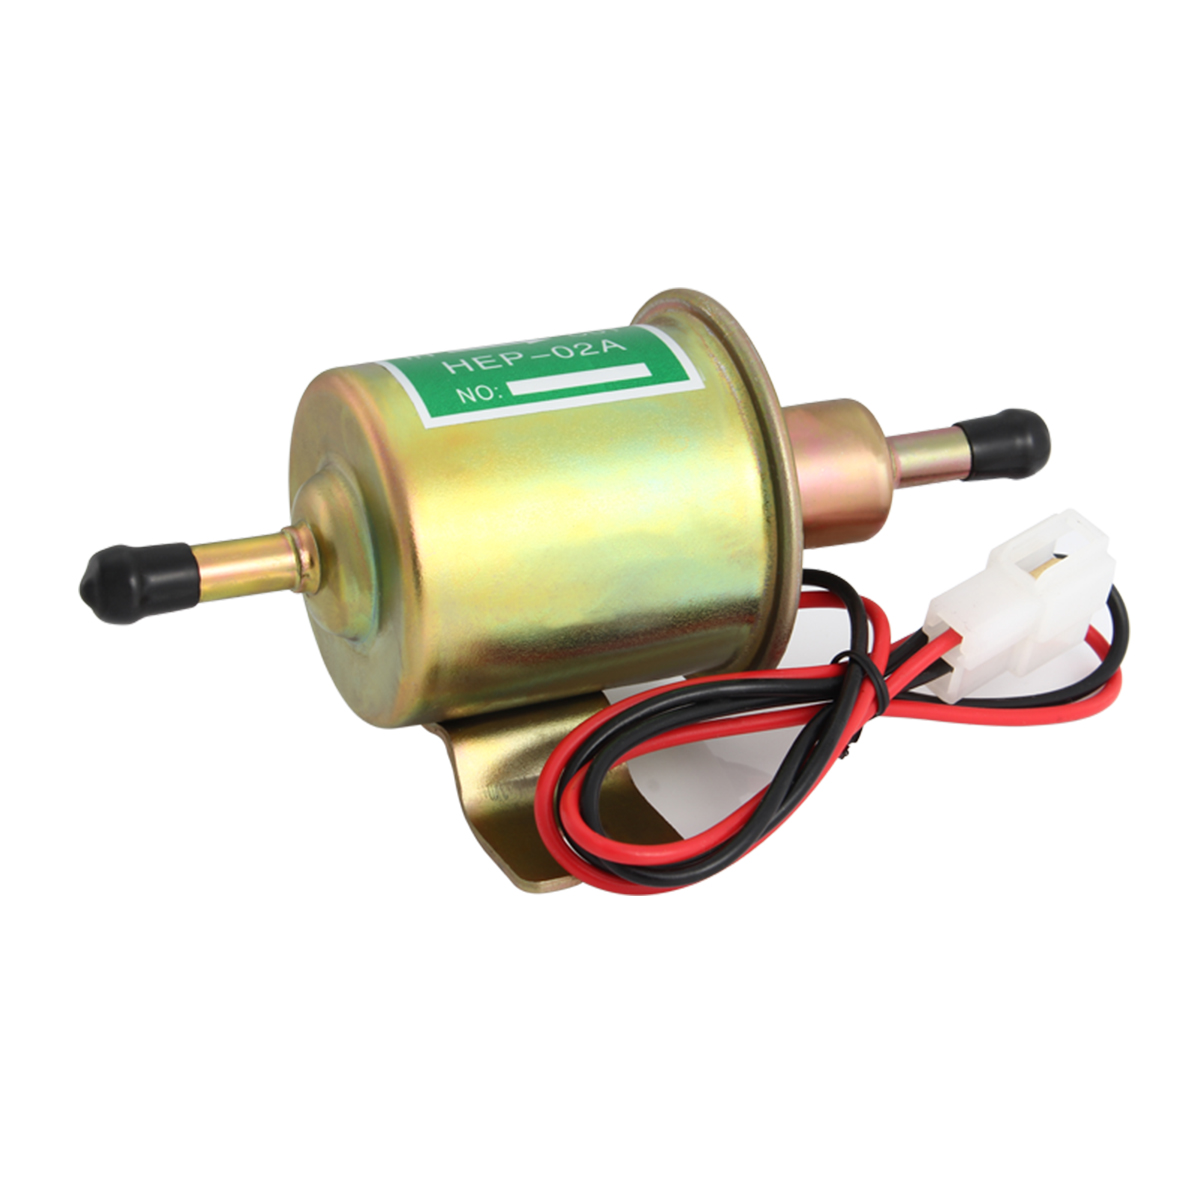 Universal 12v Petrol Gas Fuel Pump Inline Electric Pump - Gold